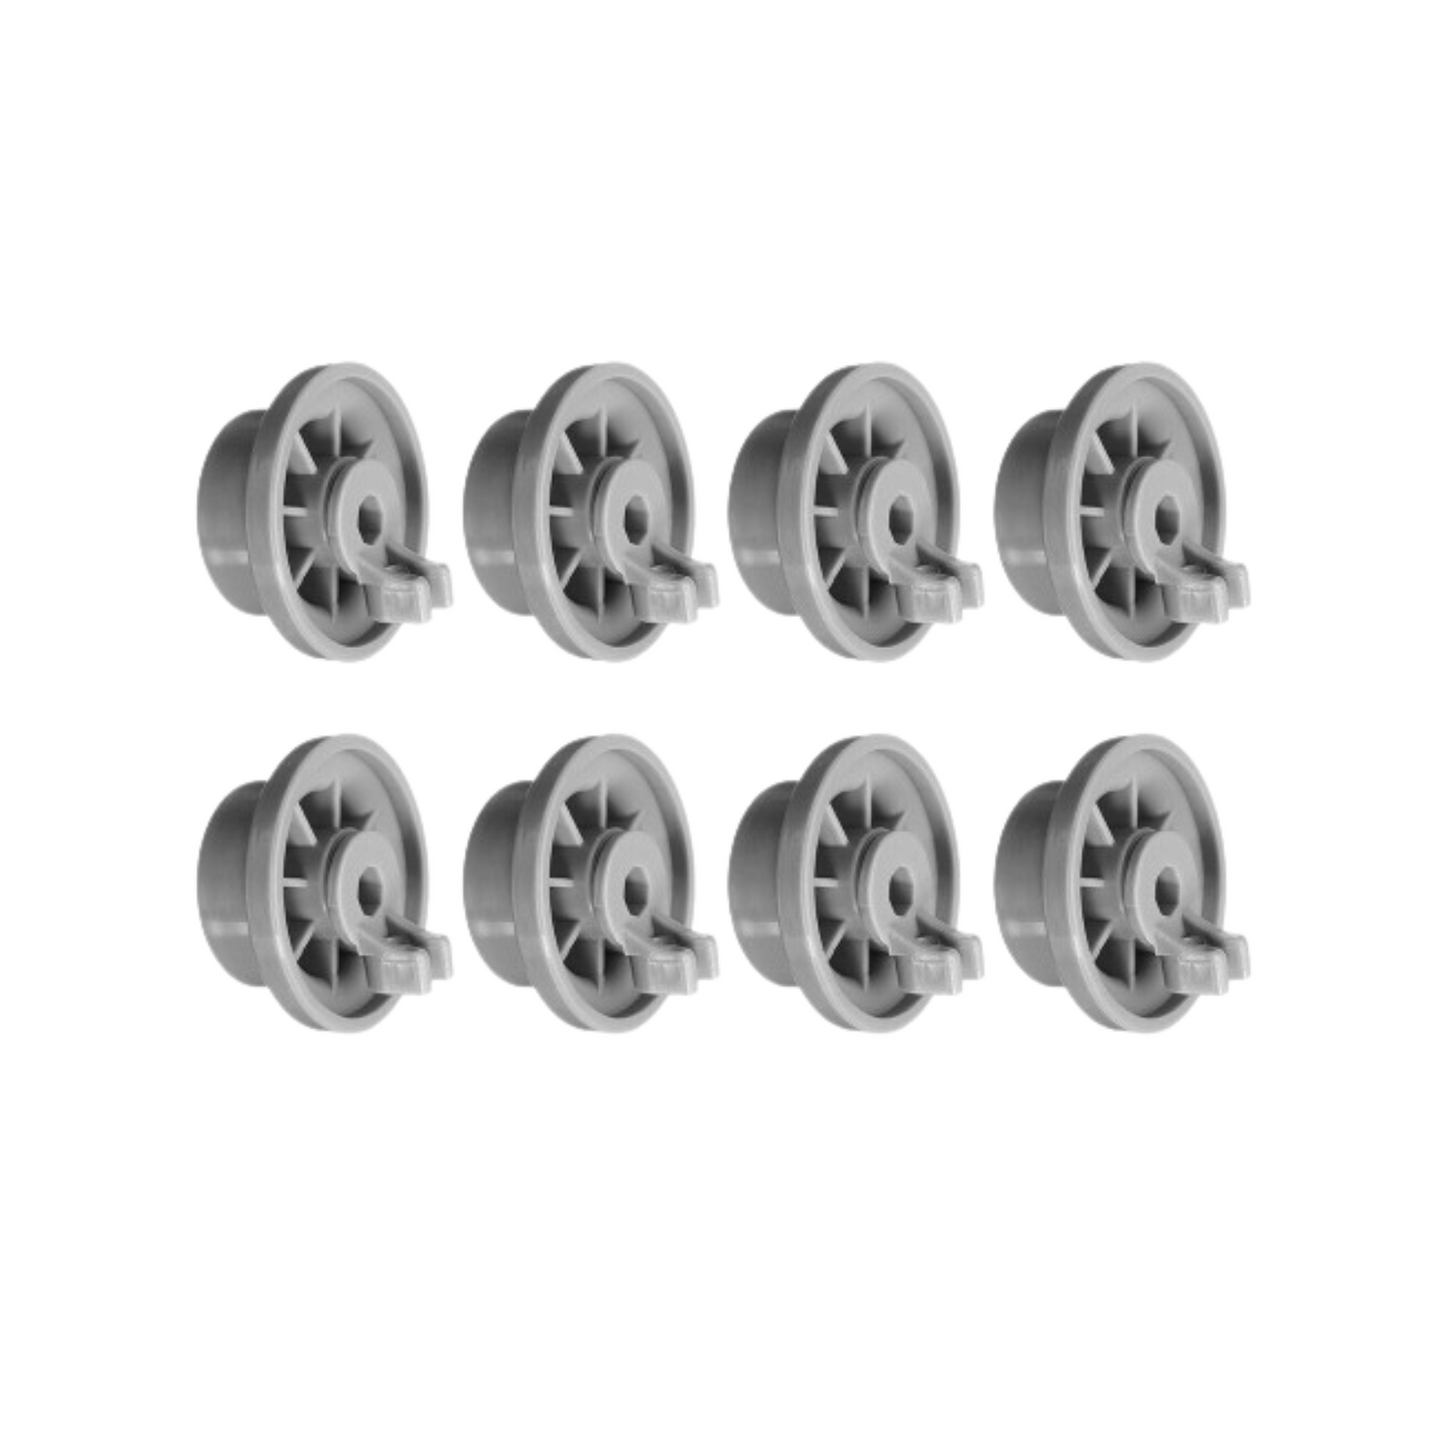 00165314 Bosch Dishwasher Bottom Basket Wheels Set 8 - AP2802428, PS3439123